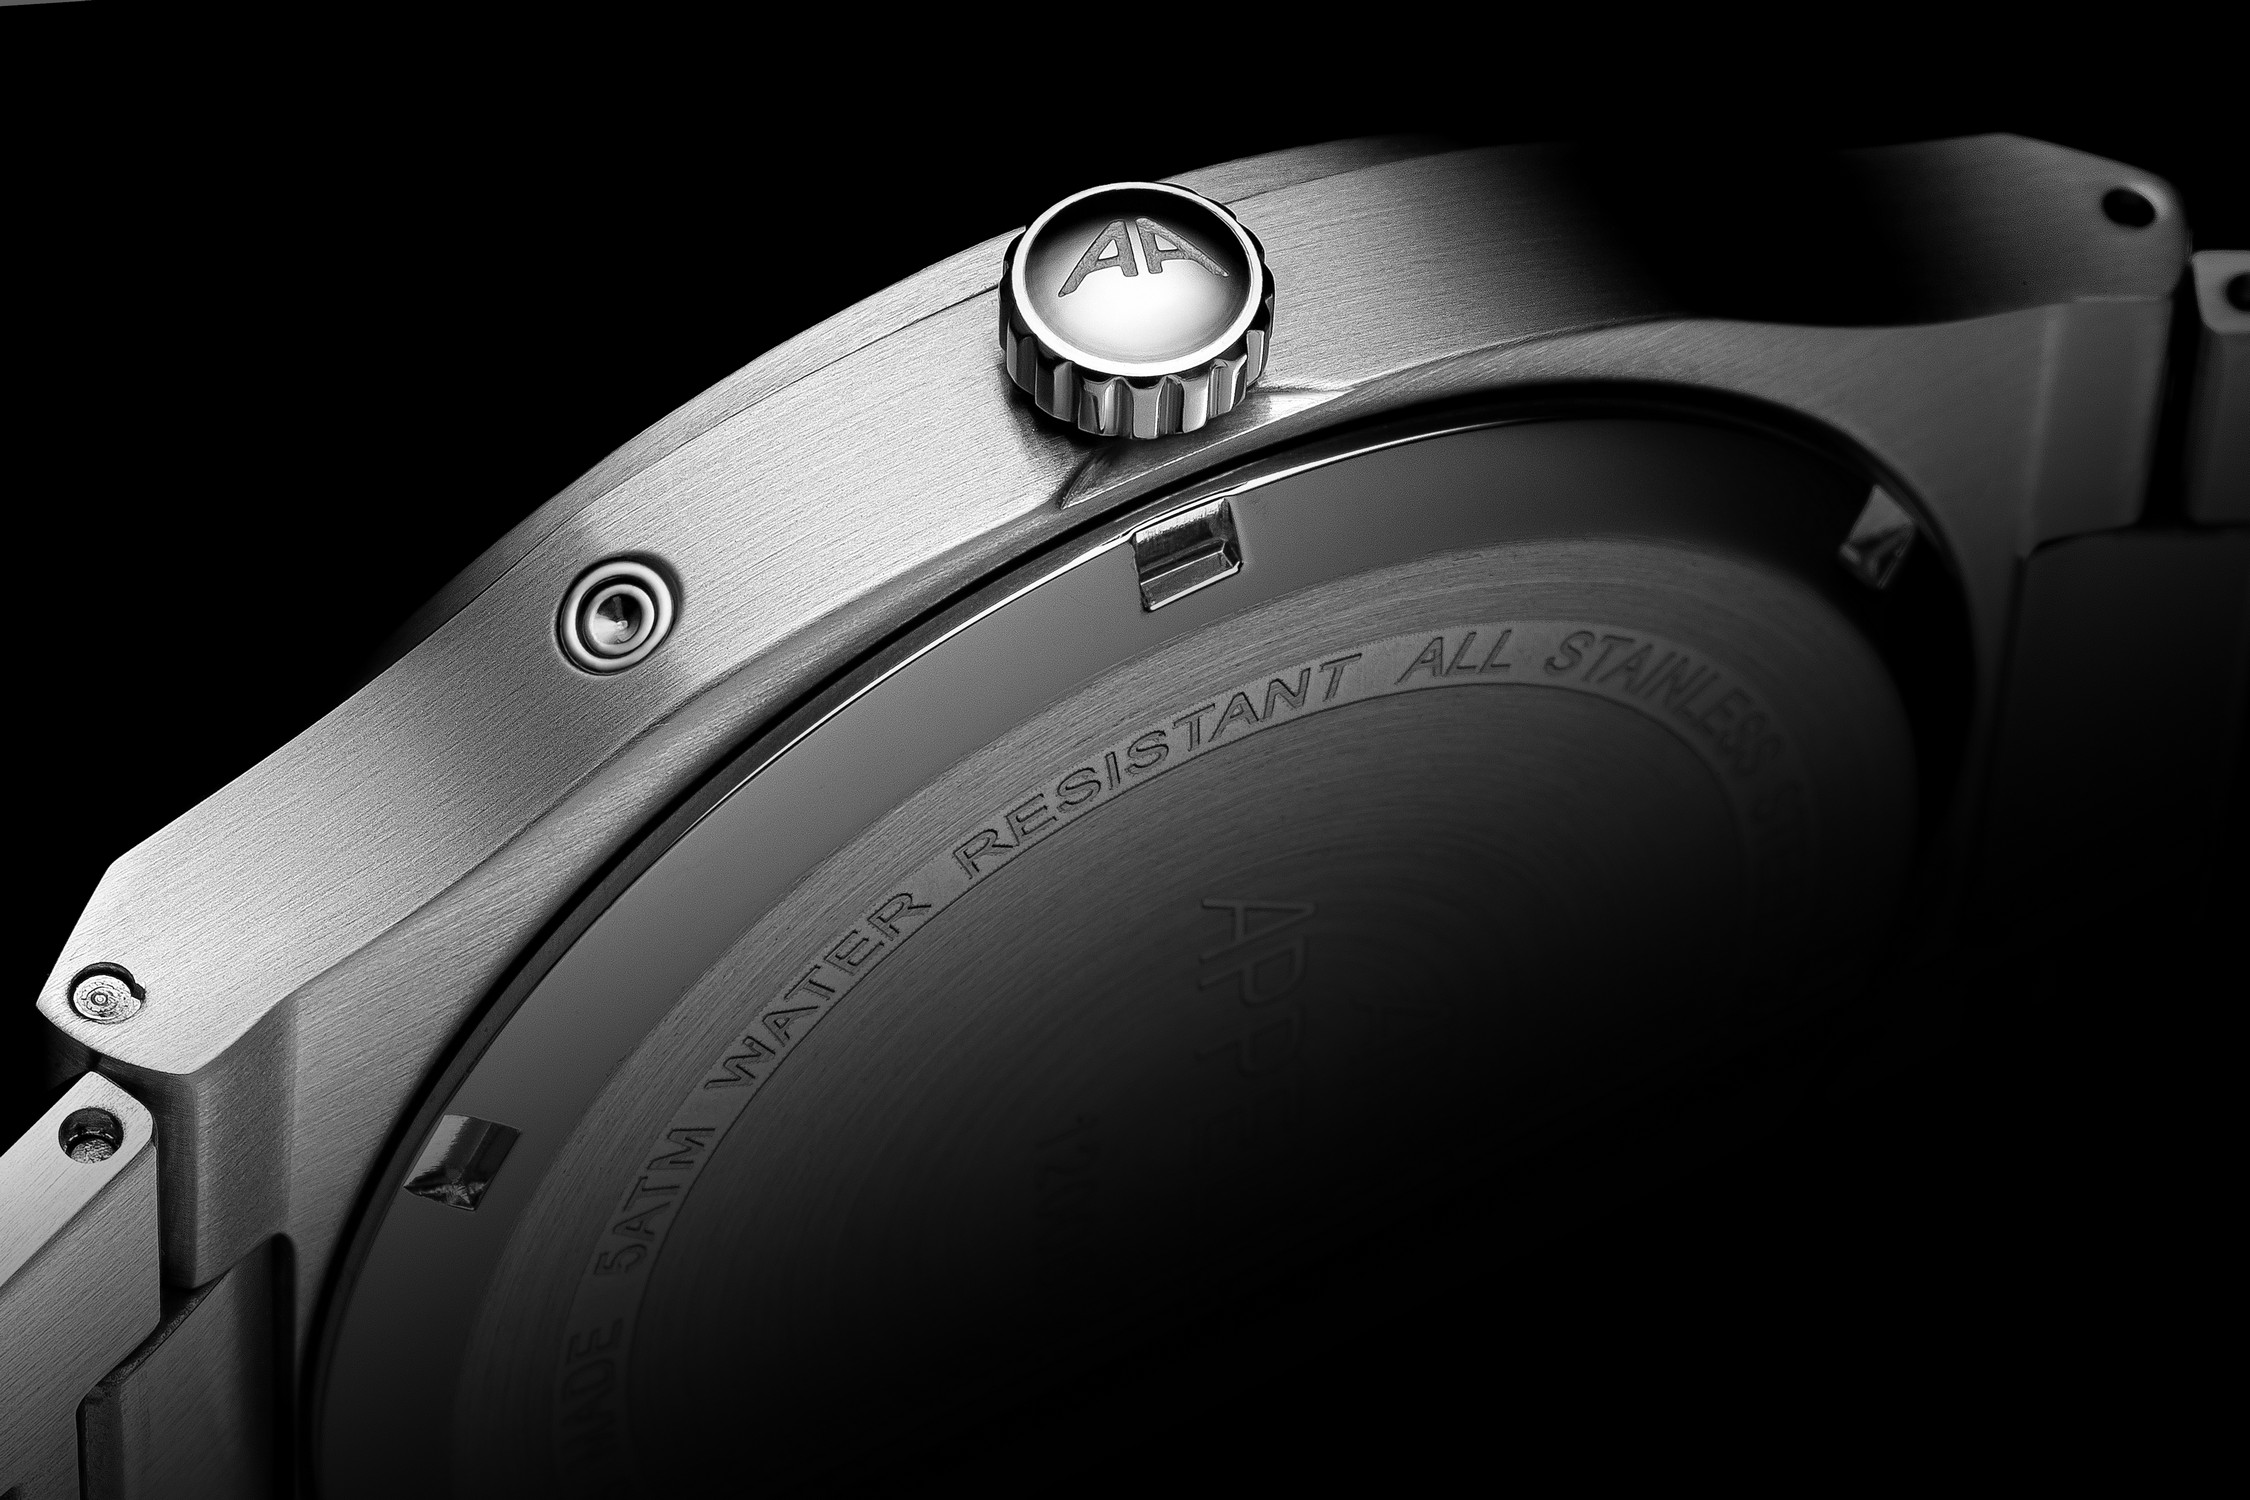 APPELLA  Мужские швейцарские часы, кварцевый механизм с фазами Луны, сталь, 42,5 мм